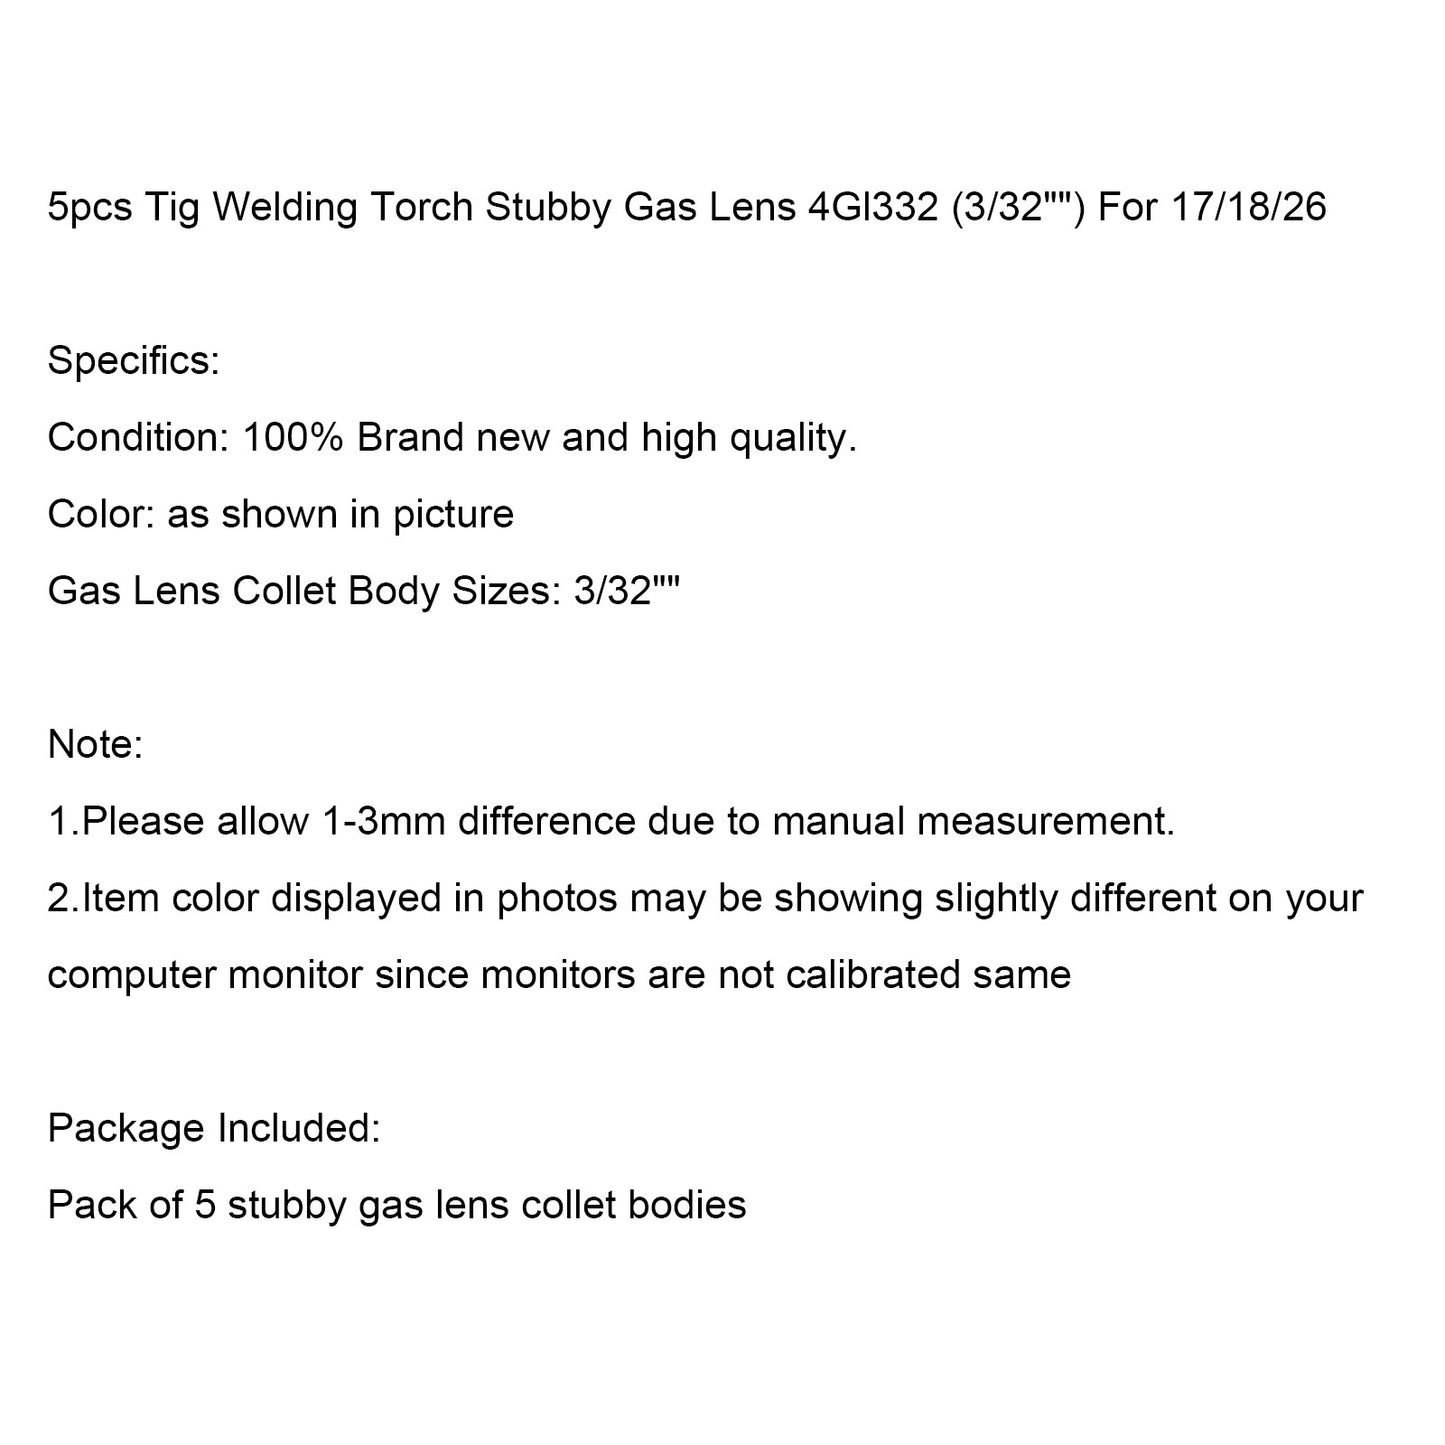 5pcs Tig Welding Torch Stubby Gas Lens 4Gl332 (3/32") For 17/18/26